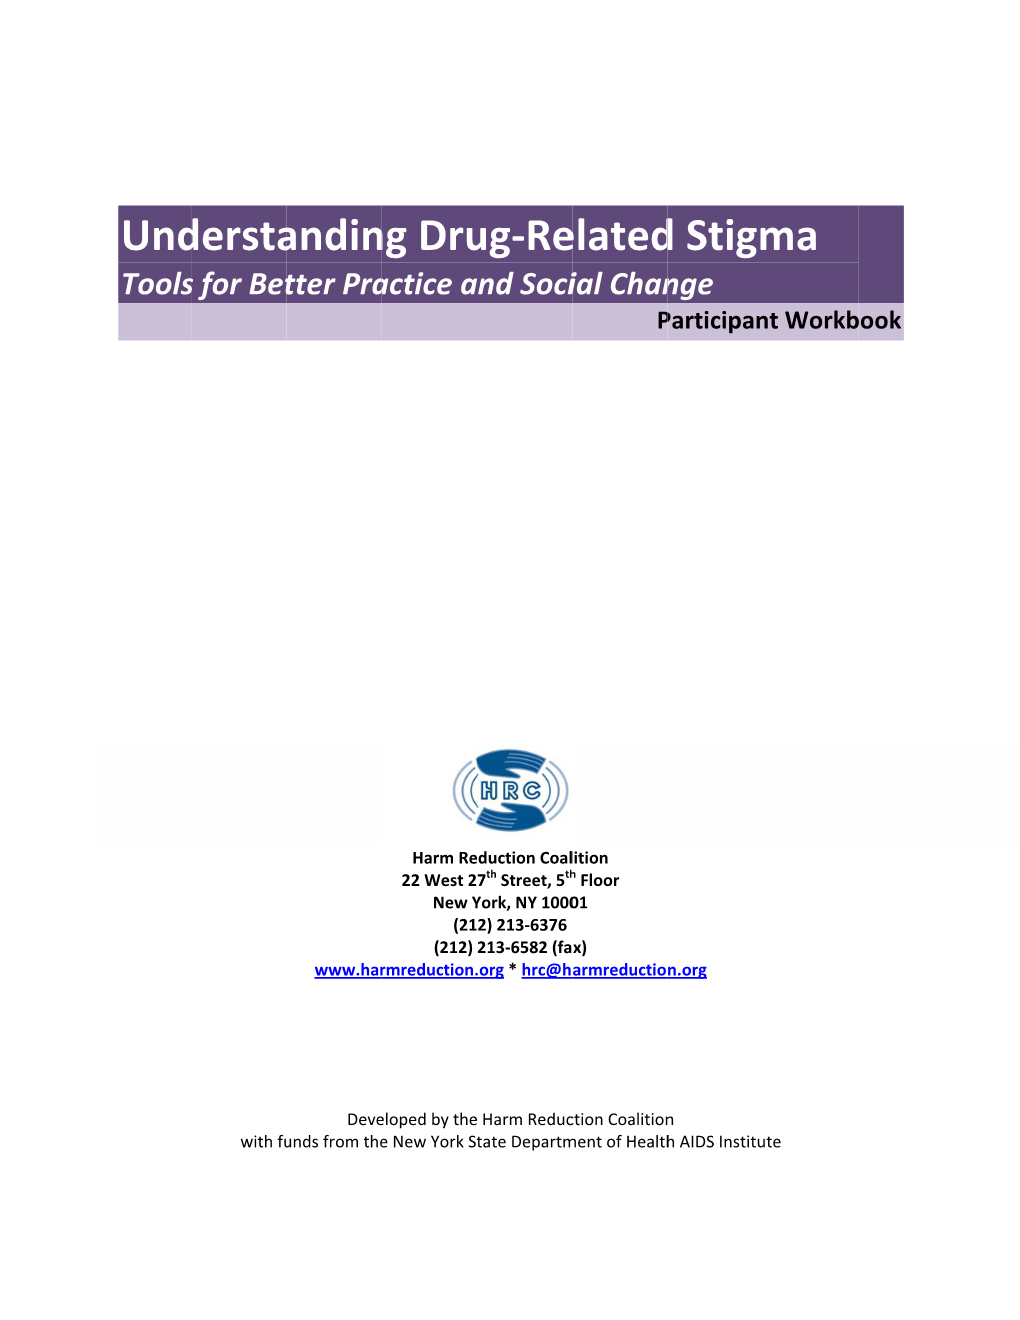 Understanding Drug Related Stigma